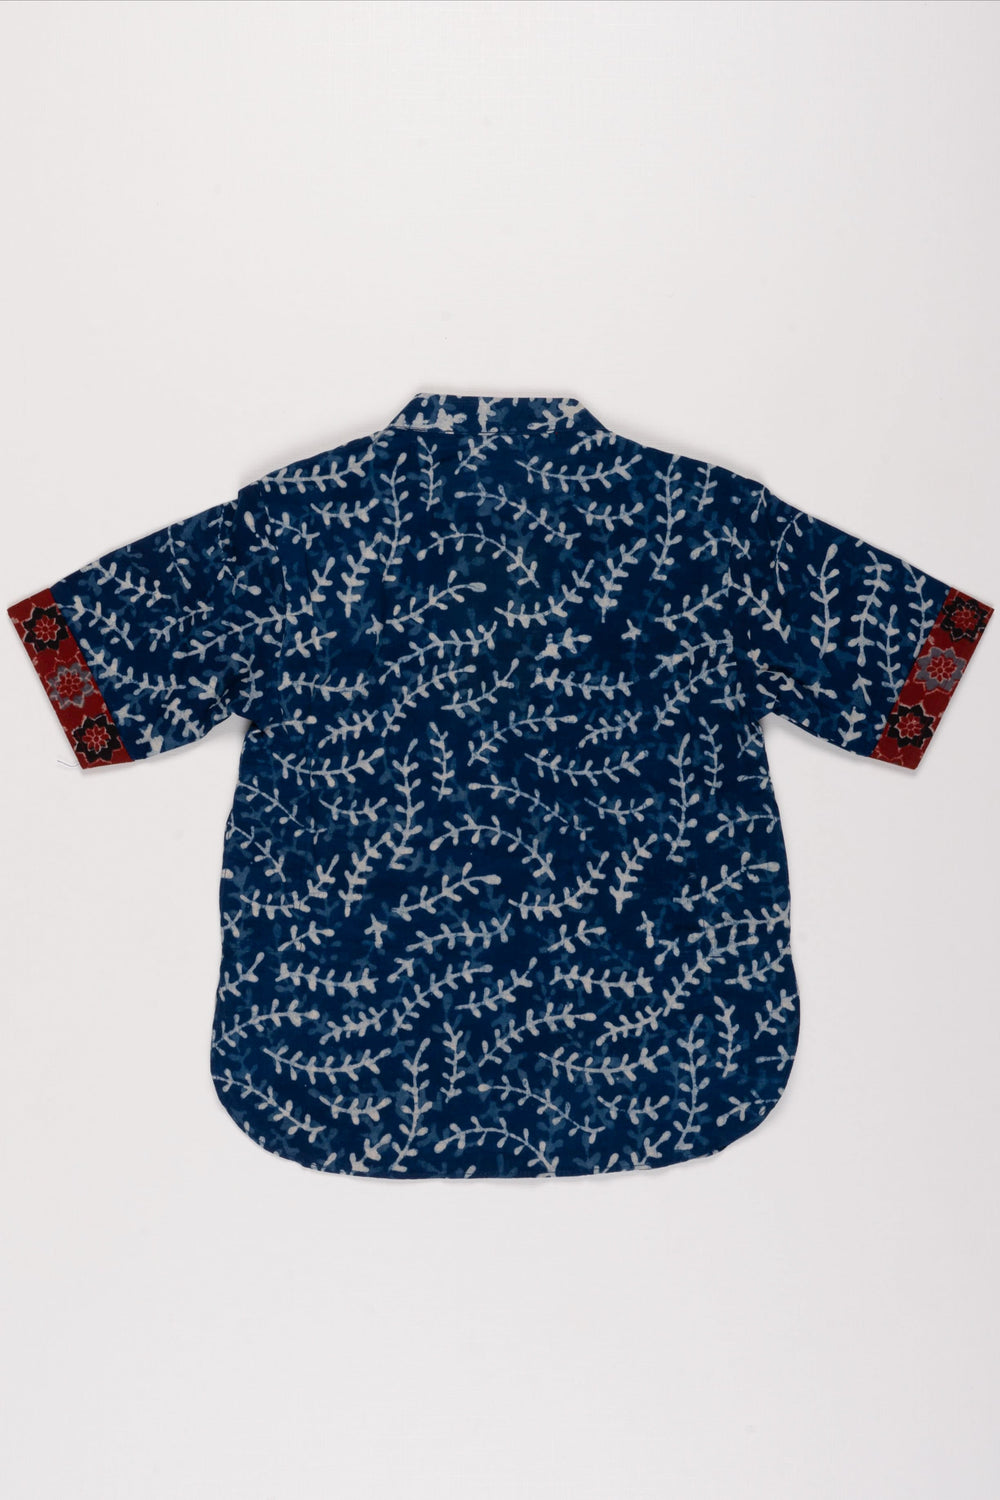 The Nesavu Boys Kurtha Shirt Boys Nature-Inspired Vine Patterned Blue Cotton Shirt with Contrasting Cuff Nesavu Shop Trendy Boys Kurta Shirts | High-Quality Cotton Ethnic Wear | The Nesavu